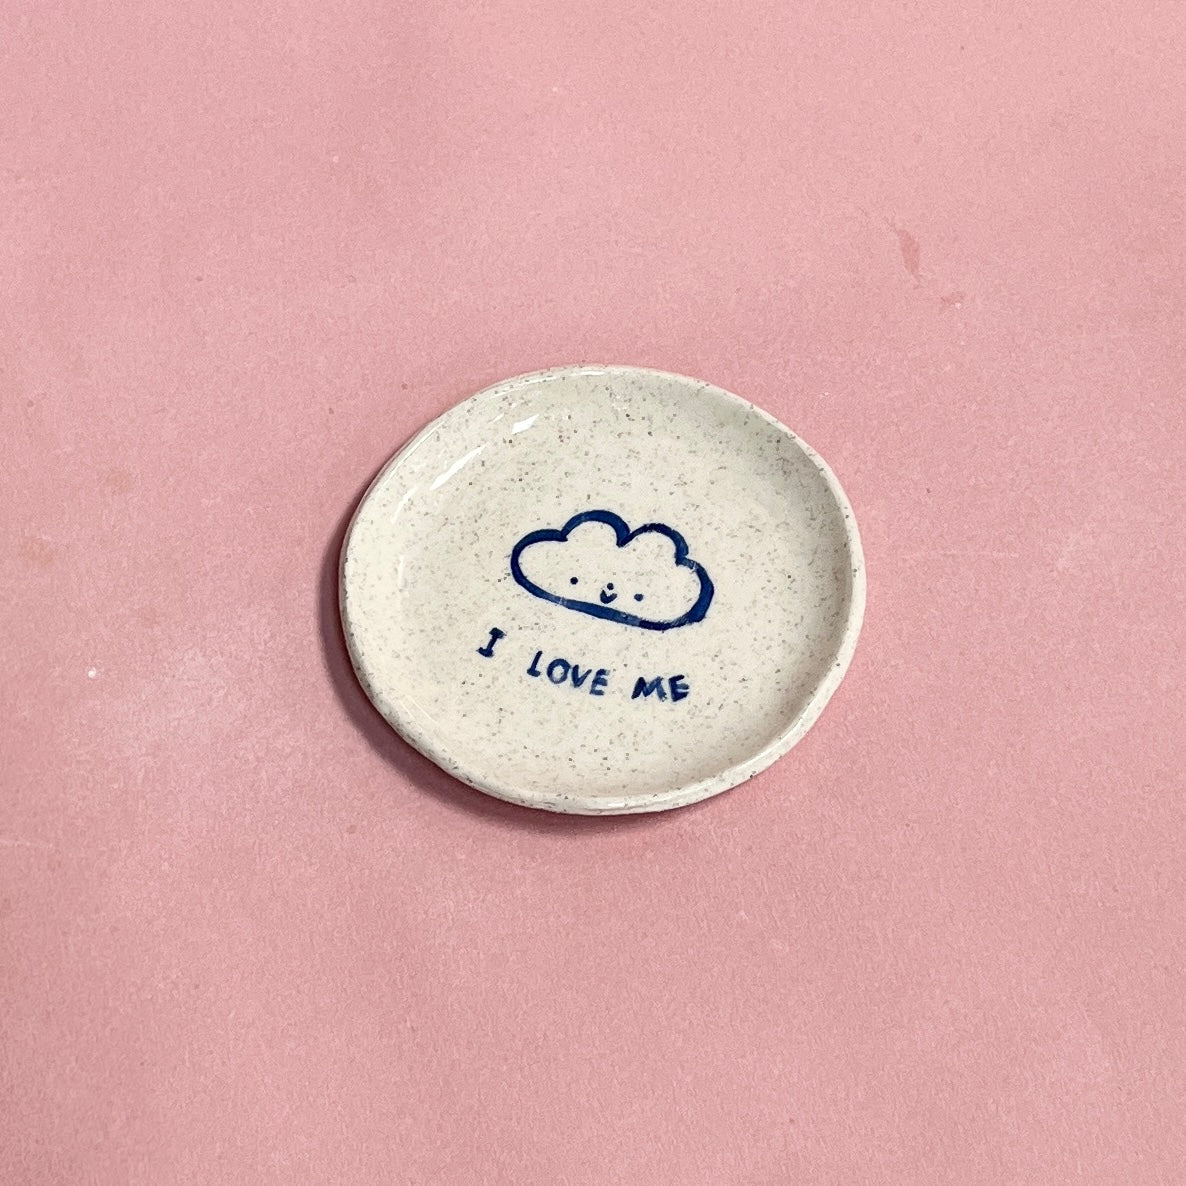 "I love me" Cloud Trinket Dish